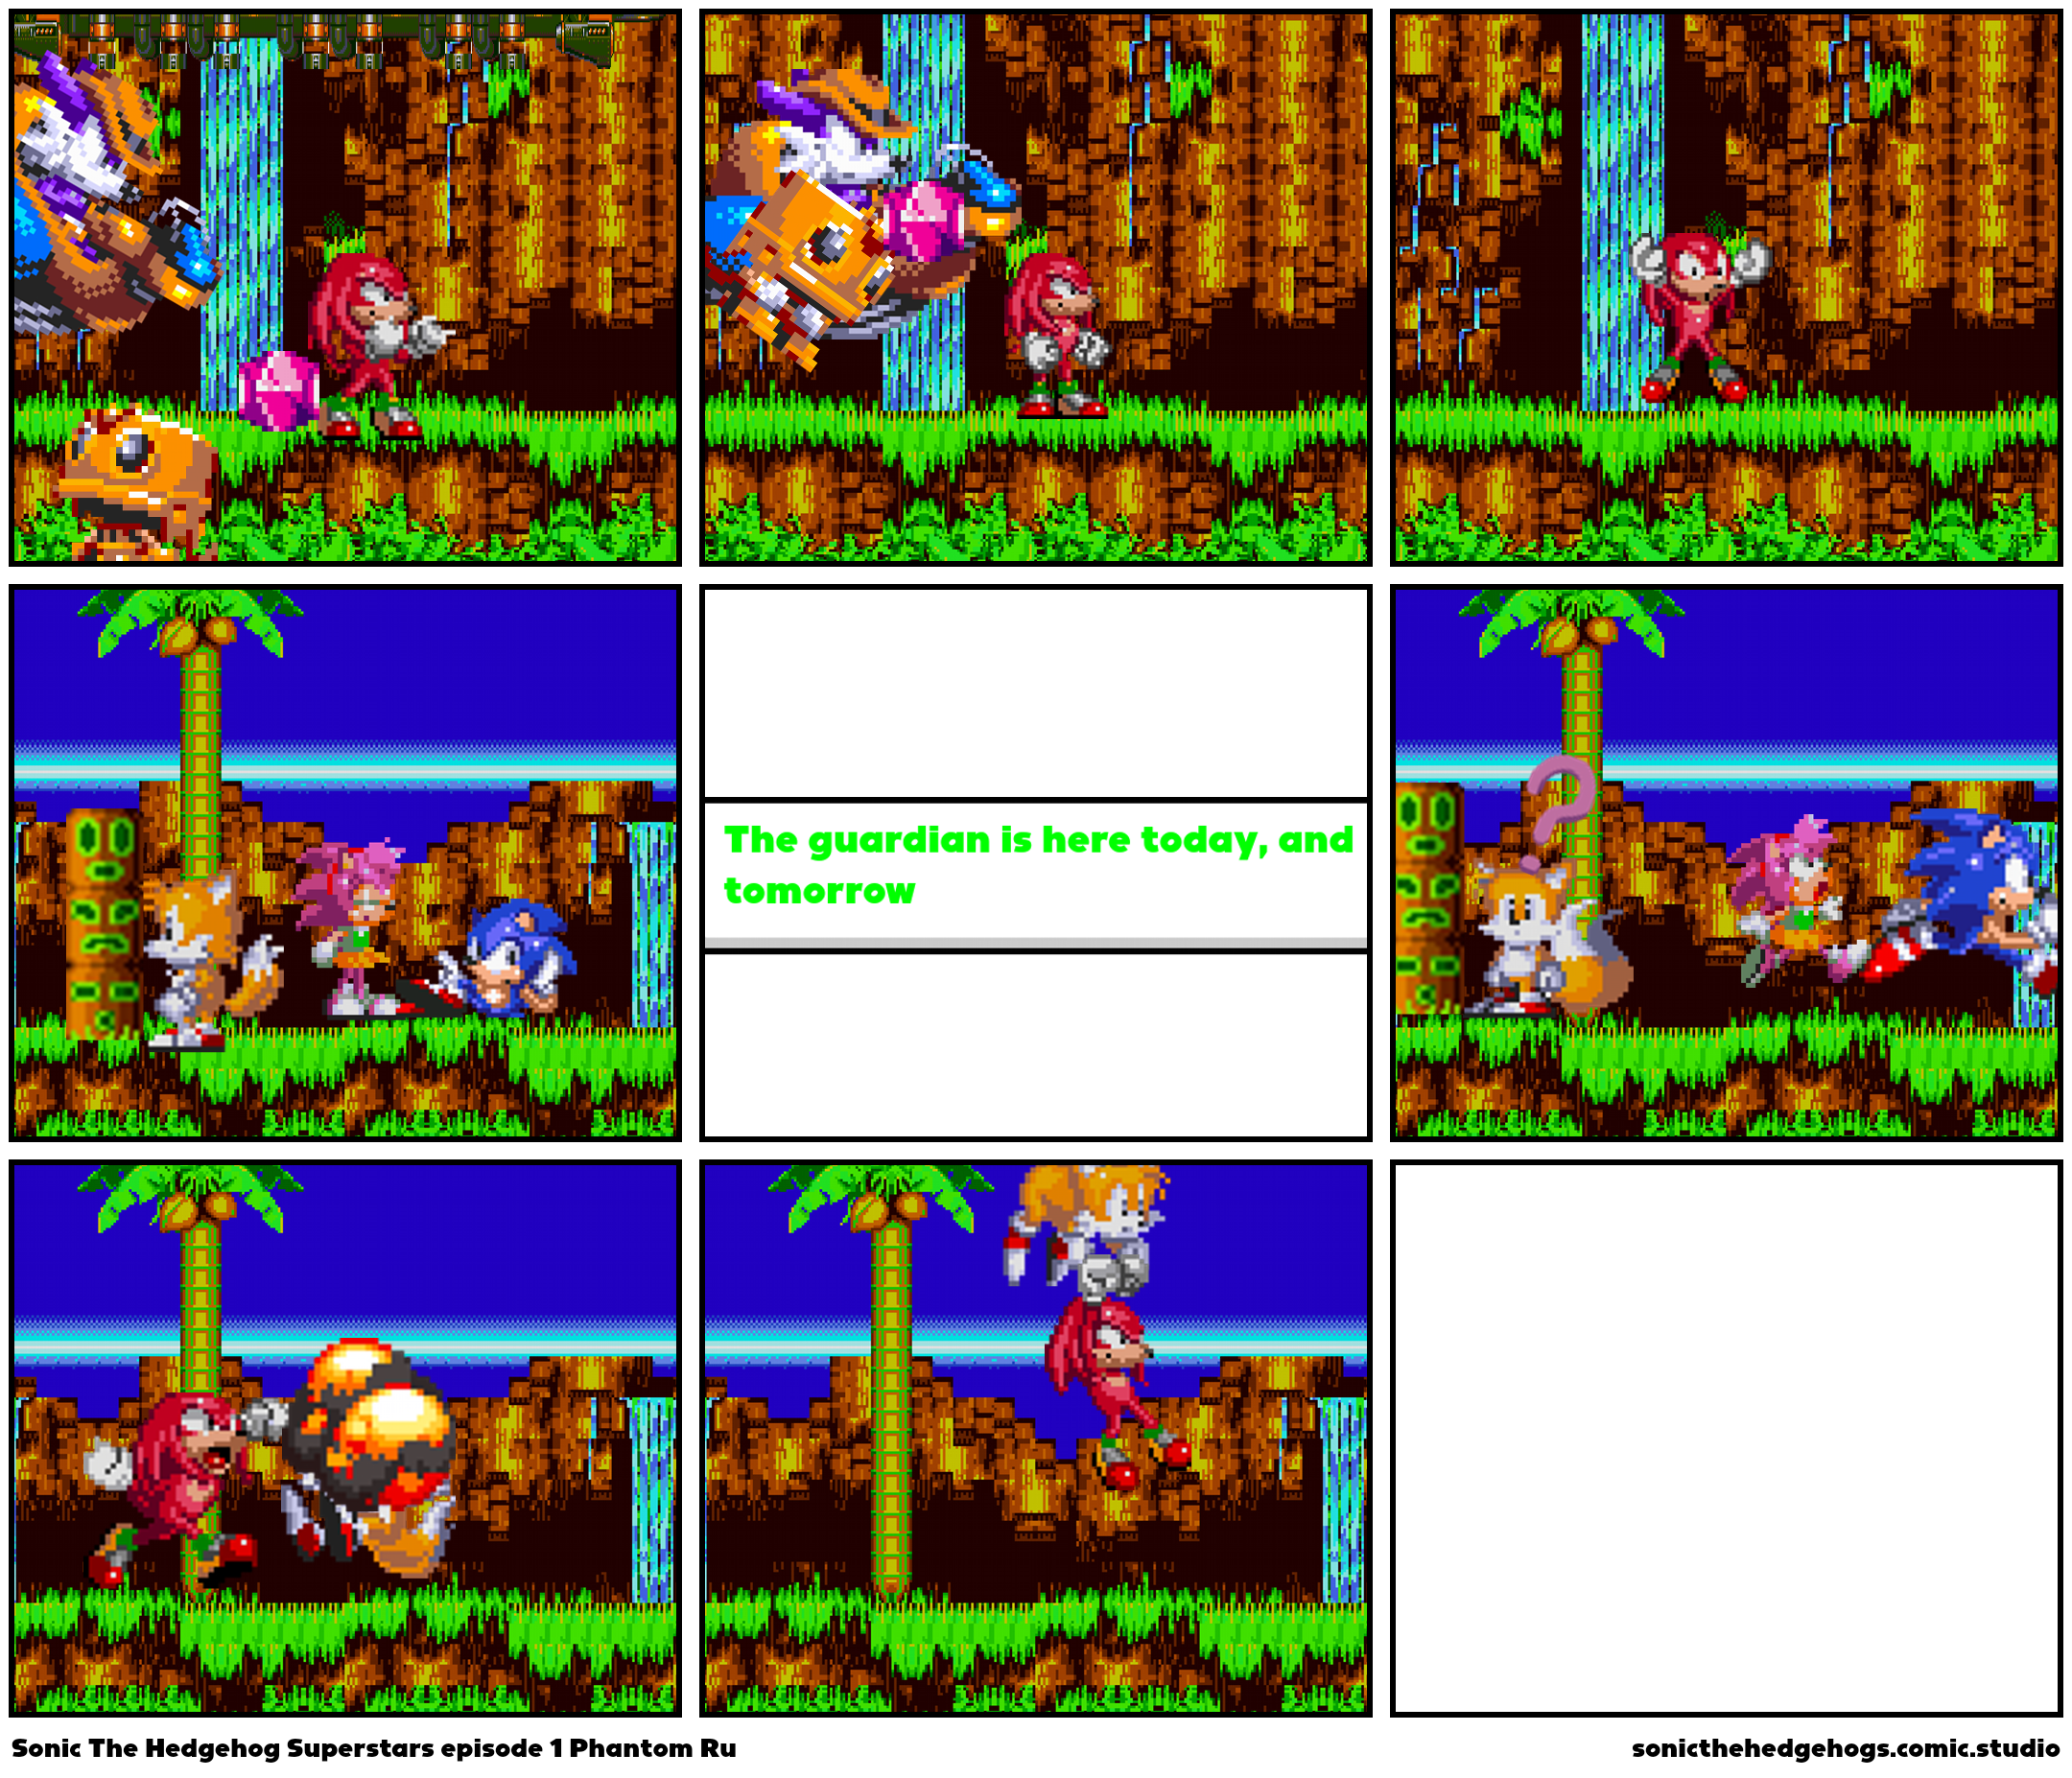 Sonic The Hedgehog Superstars episode 1 Phantom Ru